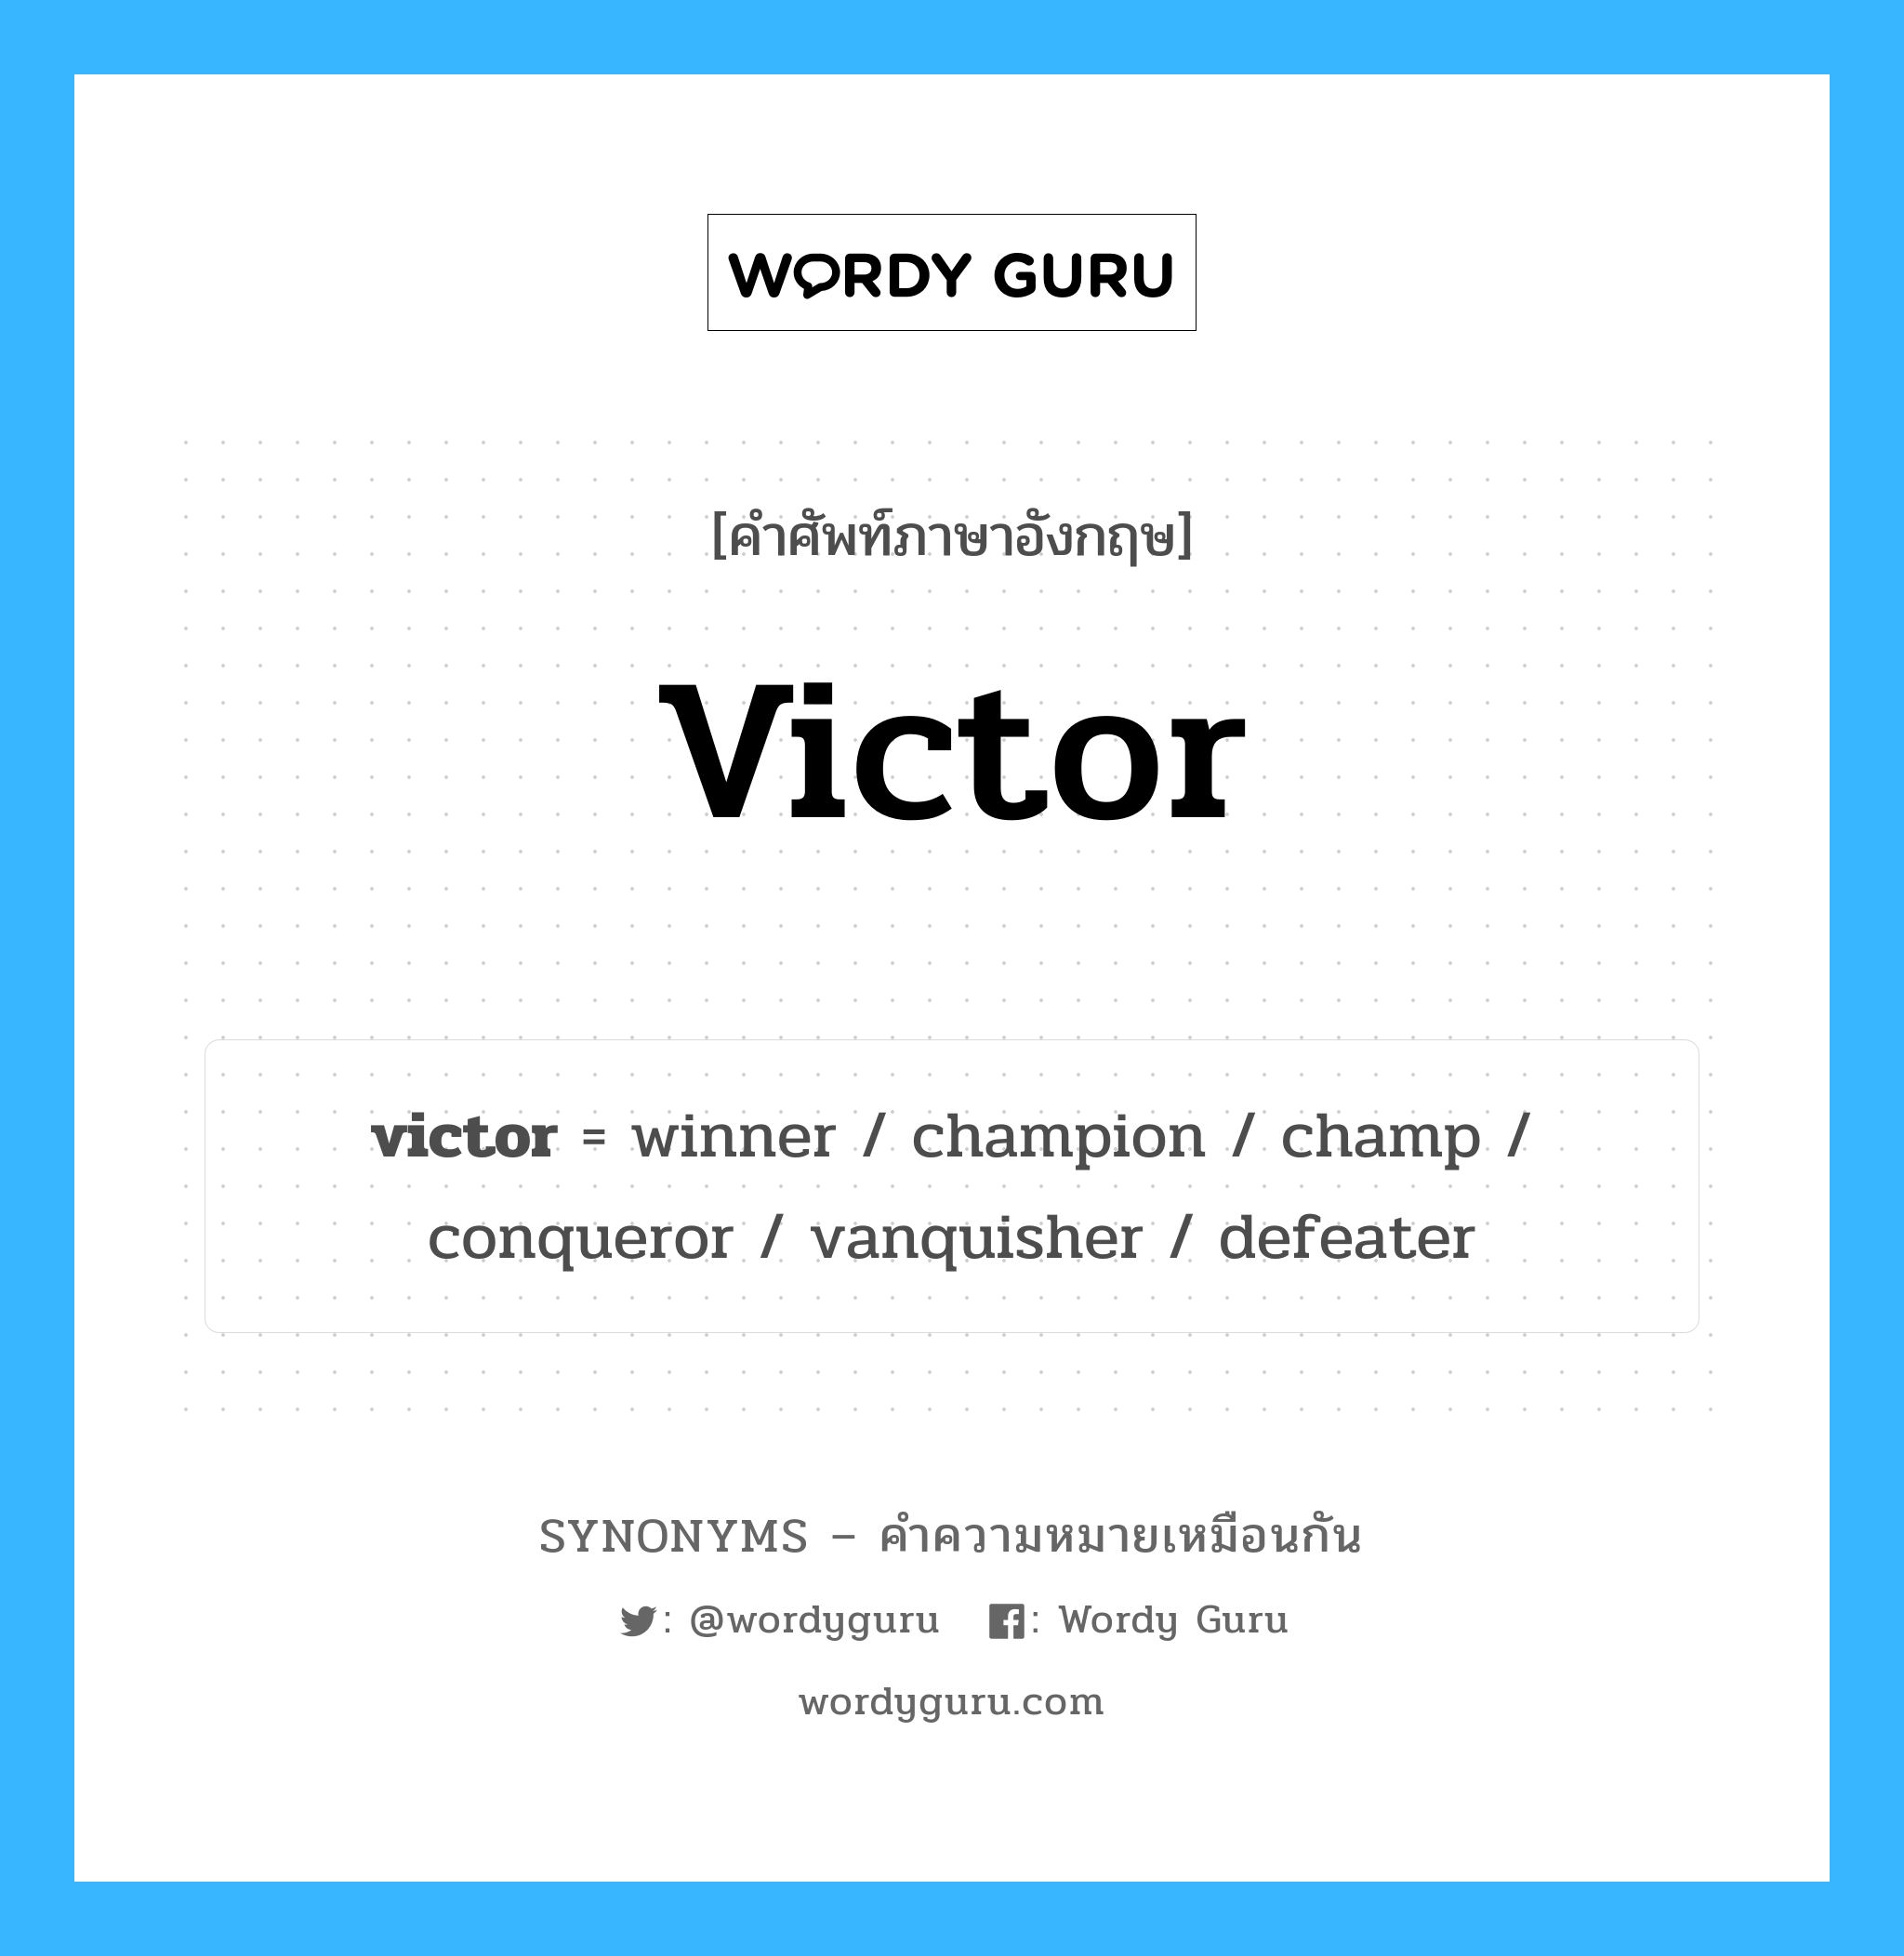 conqueror เป็นหนึ่งใน victor และมีคำอื่น ๆ อีกดังนี้, คำศัพท์ภาษาอังกฤษ conqueror ความหมายคล้ายกันกับ victor แปลว่า ผู้พิชิต หมวด victor